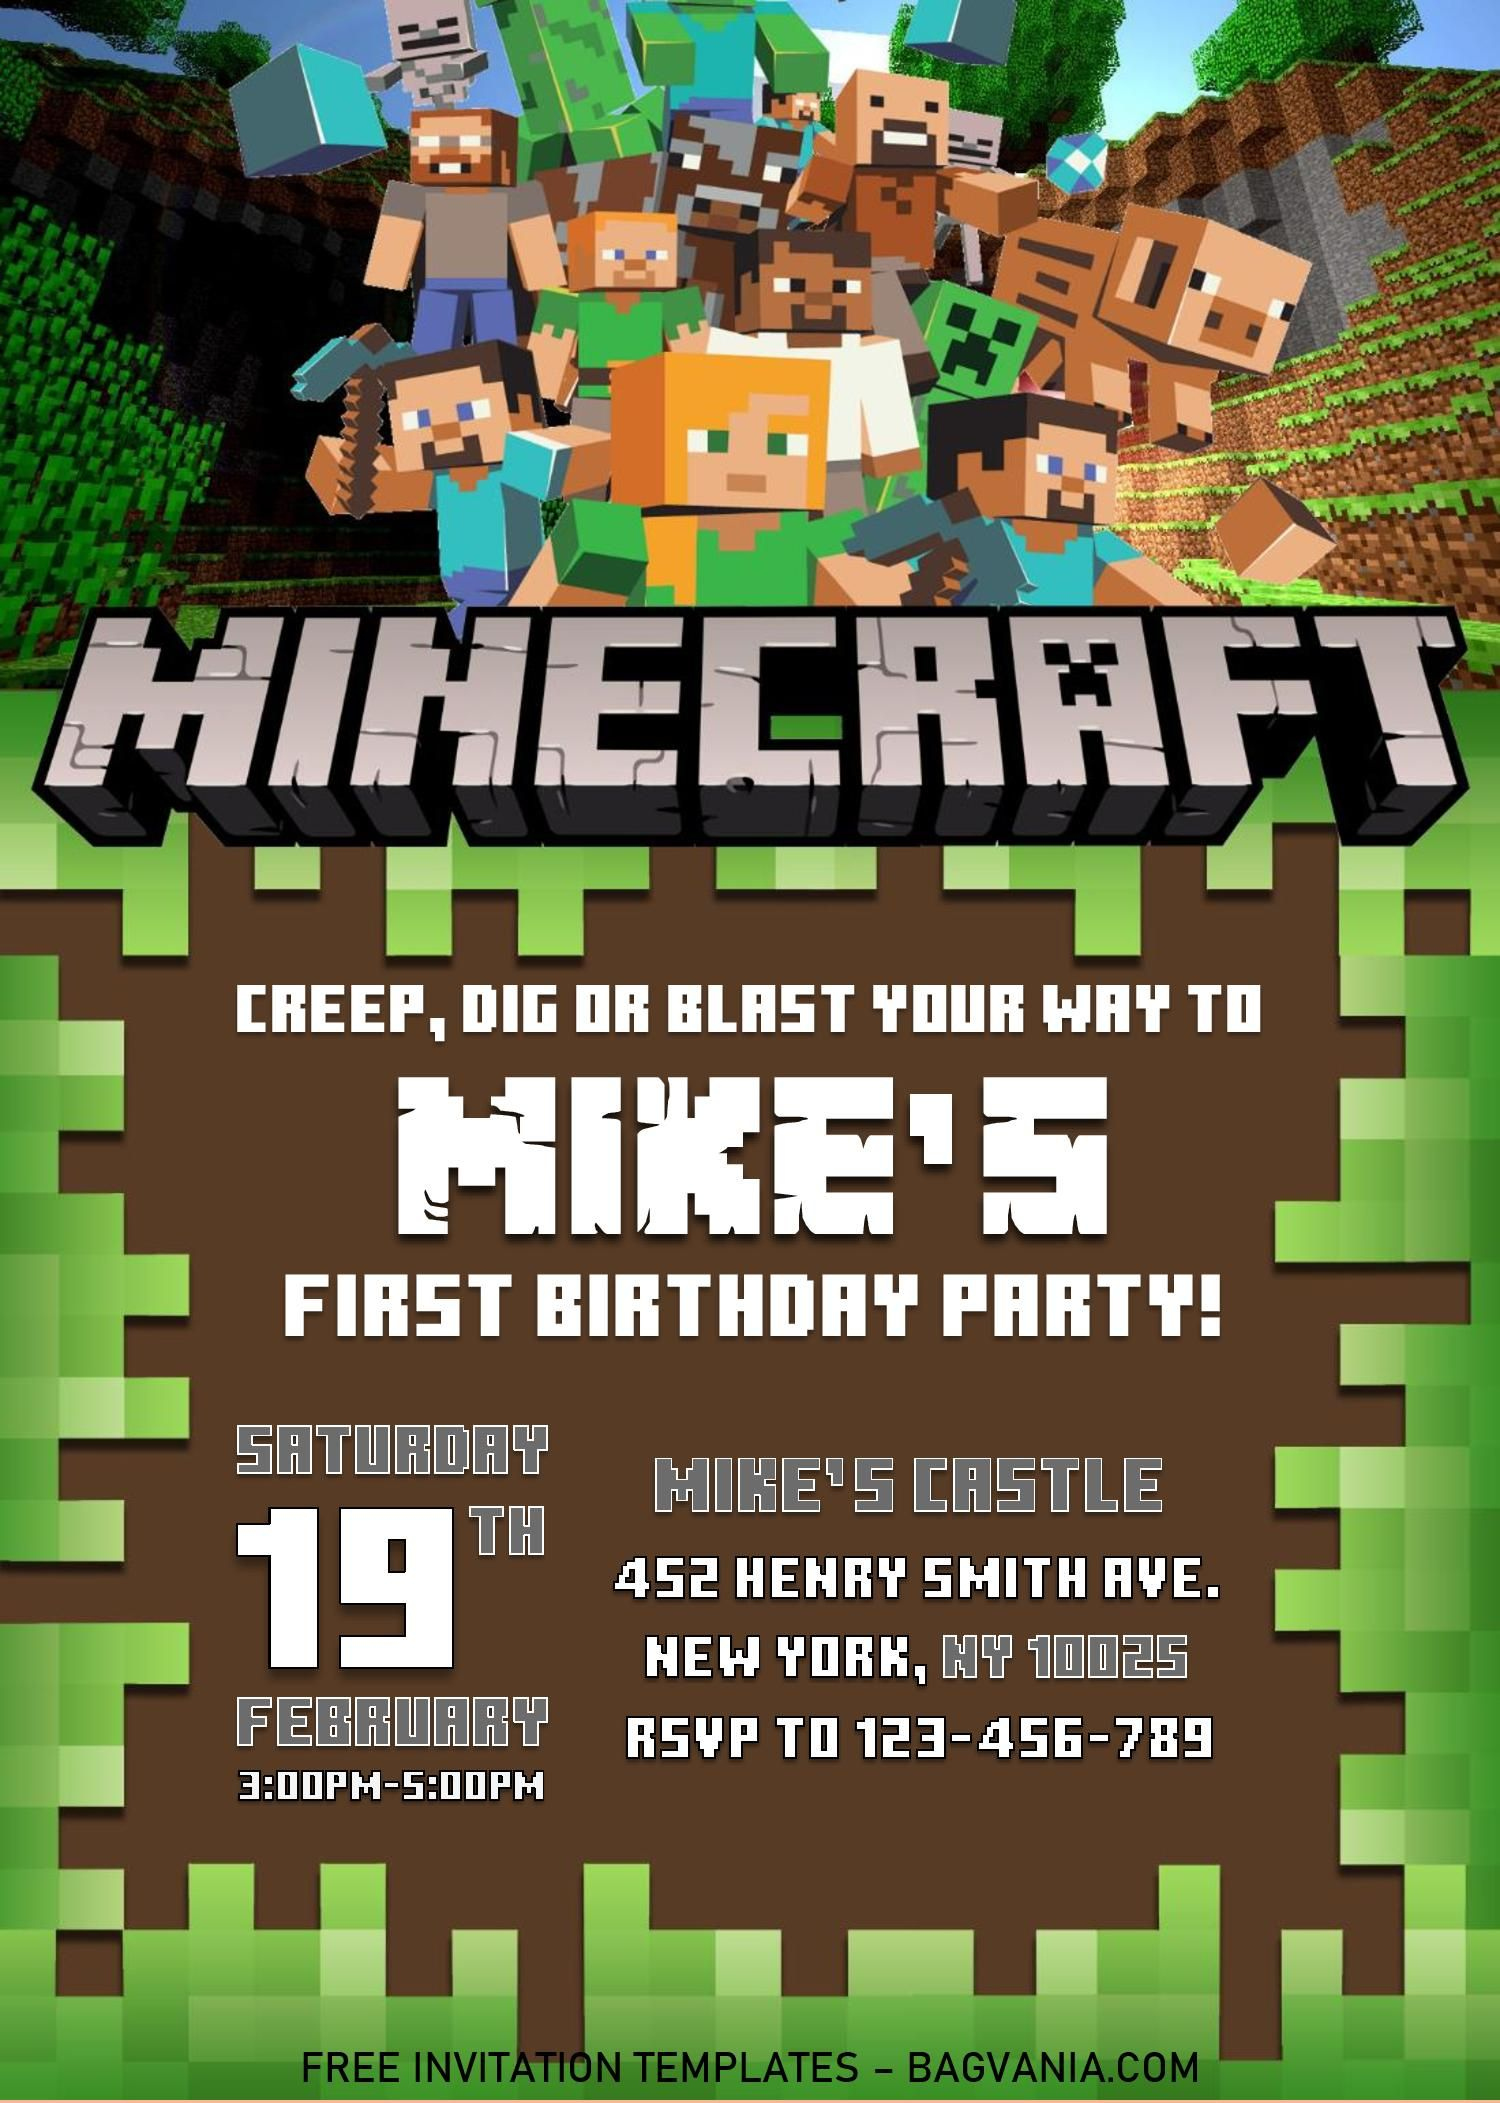 Minecraft Birthday Invitation Templates - Editable With Ms Word with regard to Free Printable Minecraft Invitations